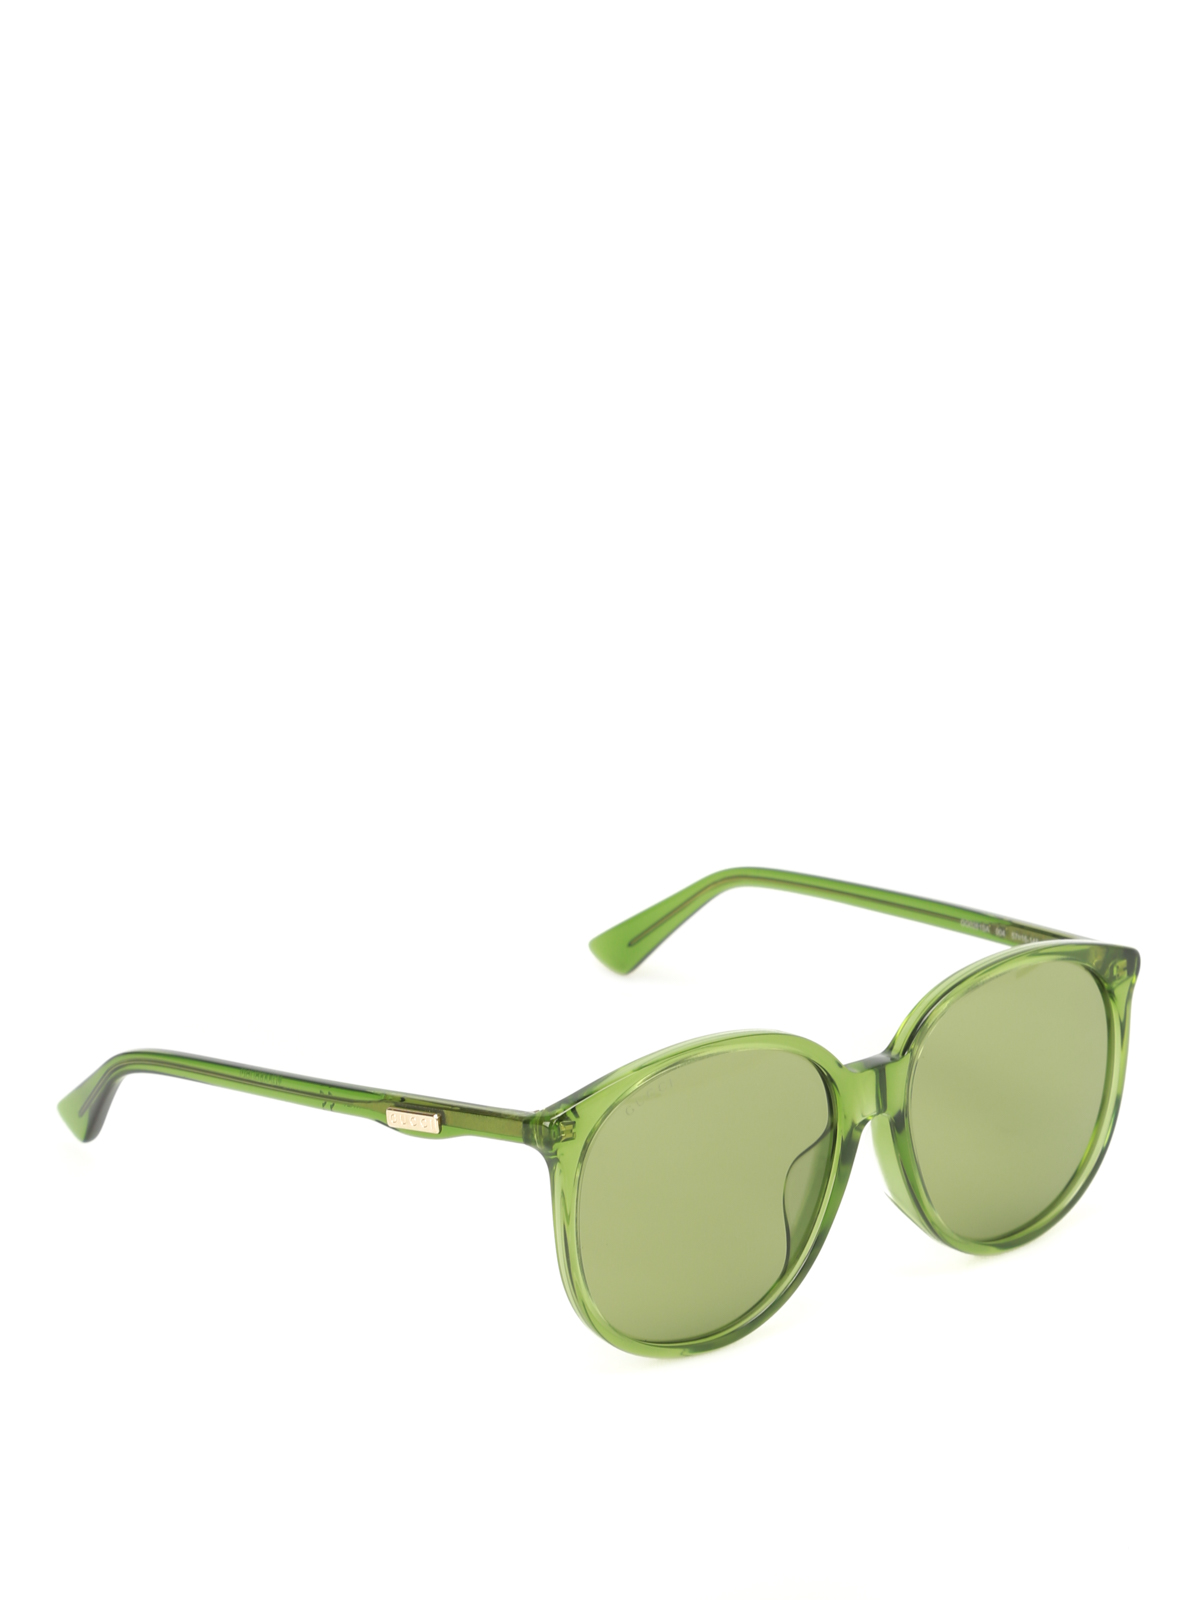 plantageejer craft Souvenir Sunglasses Gucci - Green sunglasses - GG0261SA004 | Shop online at iKRIX